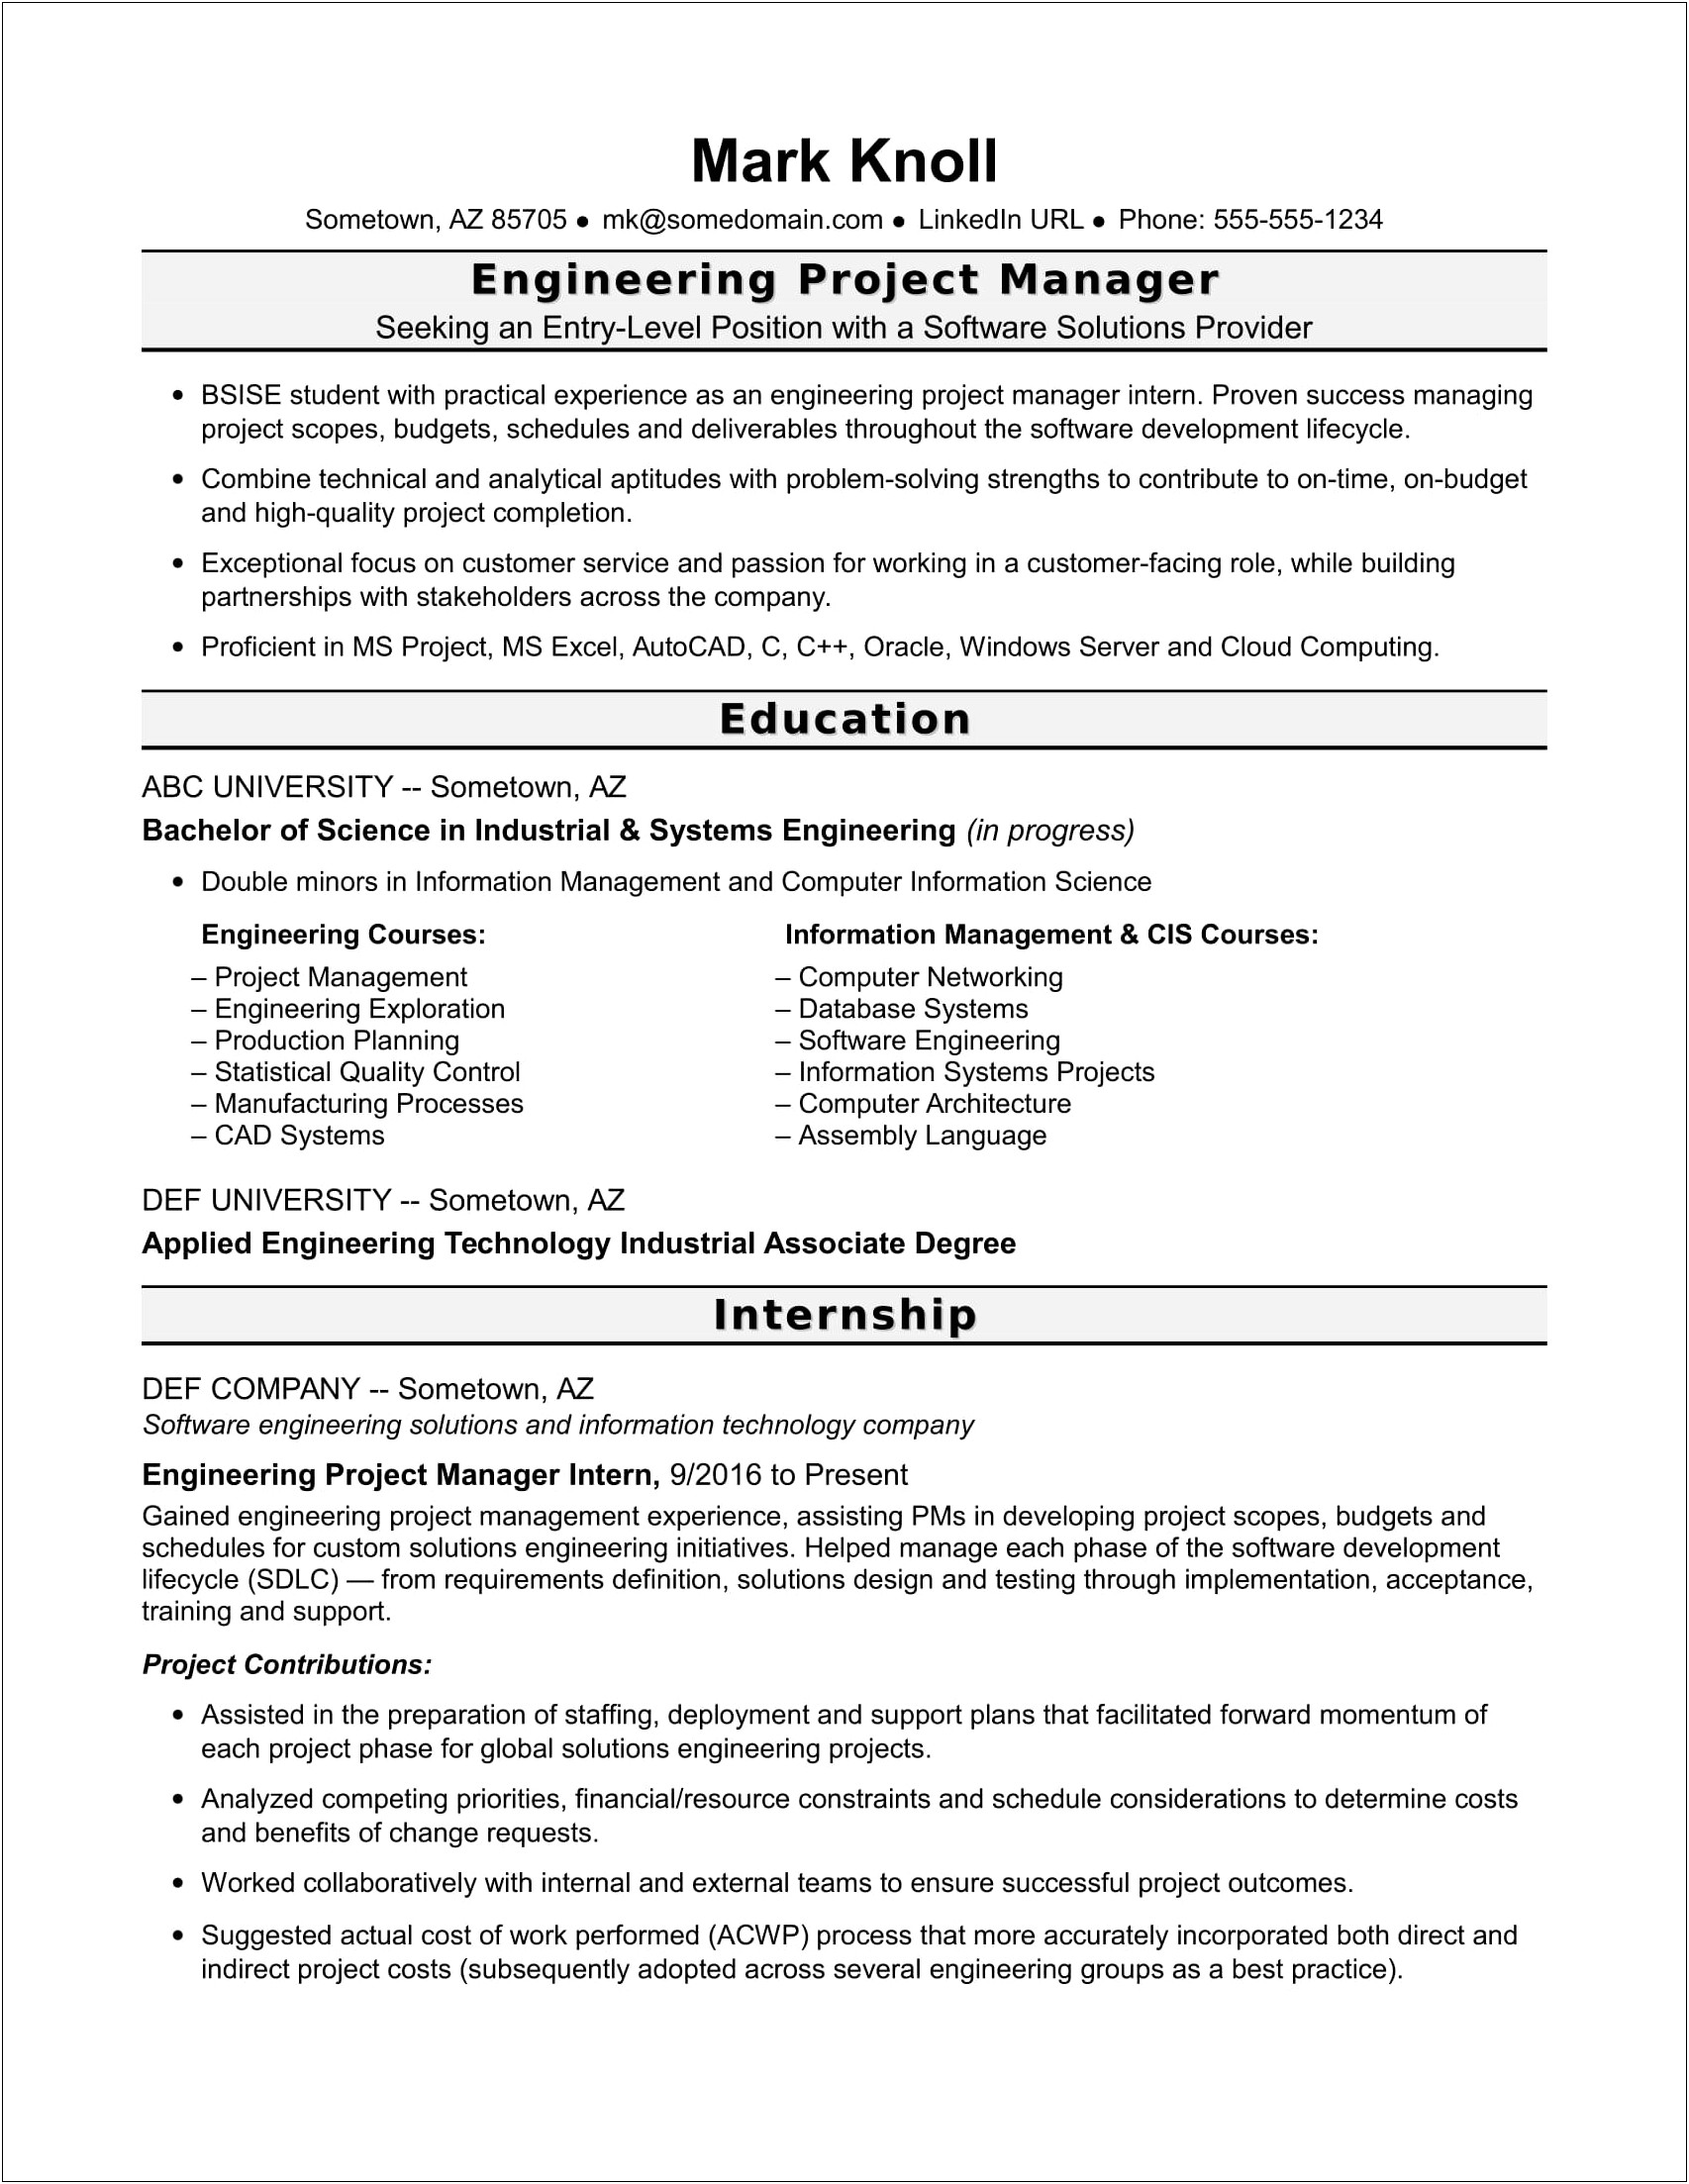 Senior Software Engineer Manager Resume